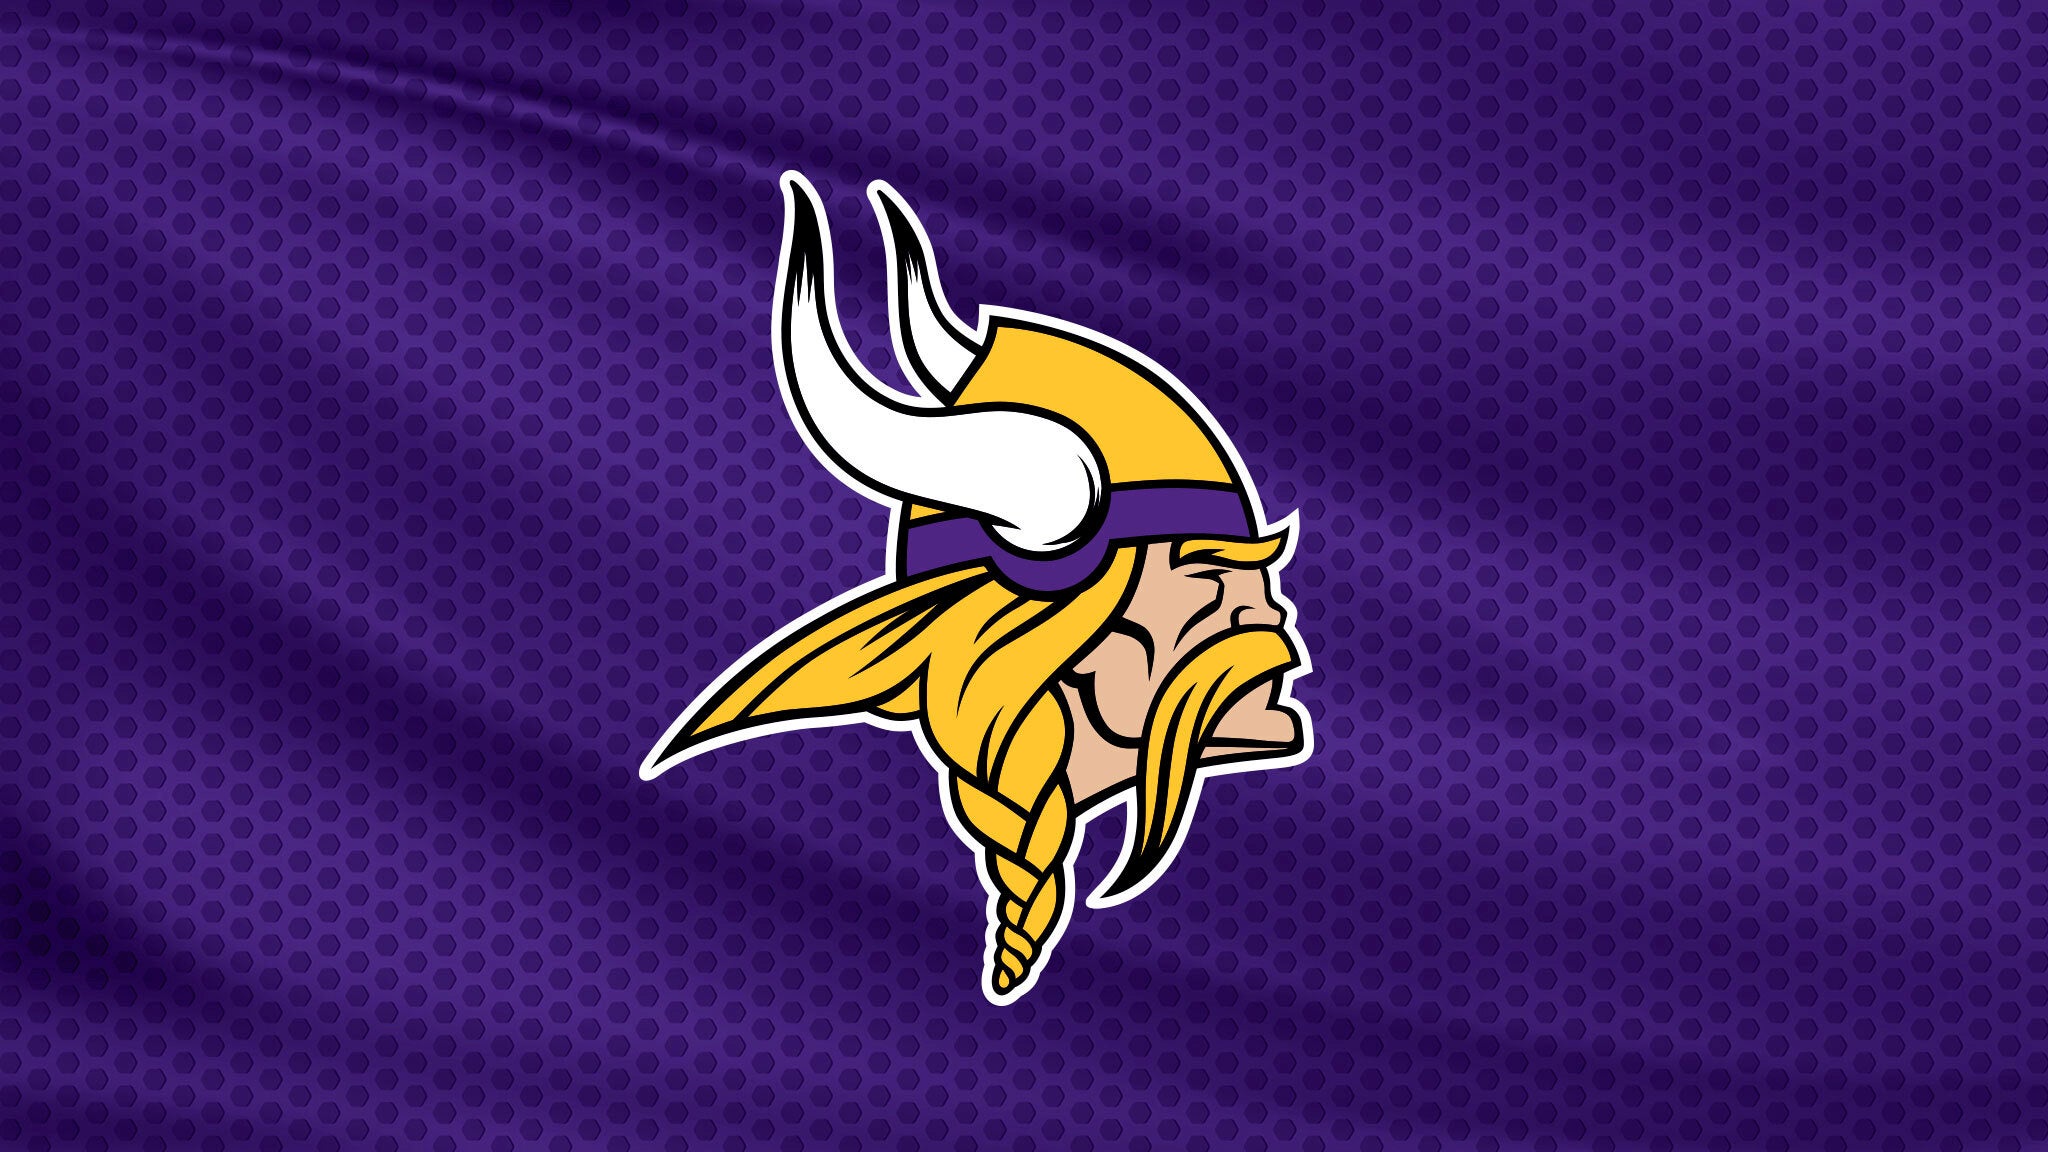 Minnesota Vikings vs. Detroit Lions hero